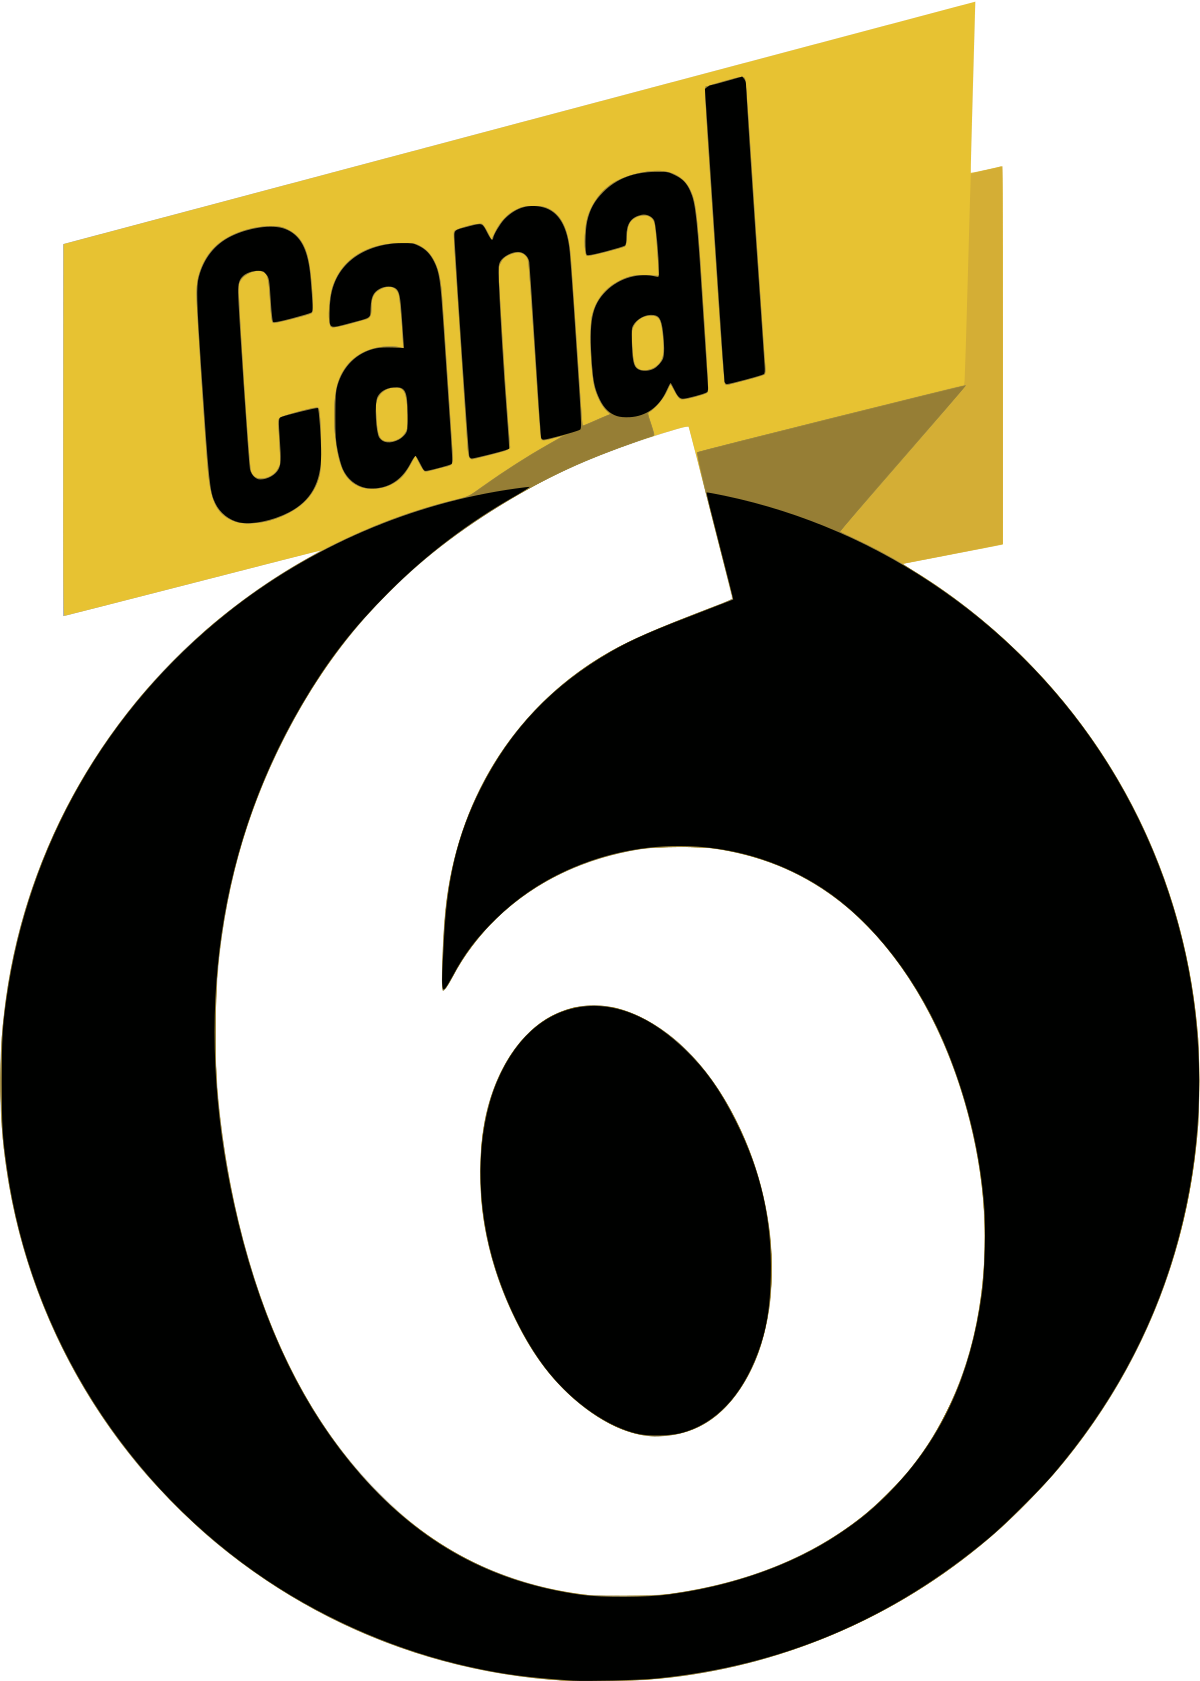 Canal 6 Mexico Wikipedia La Enciclopedia Libre